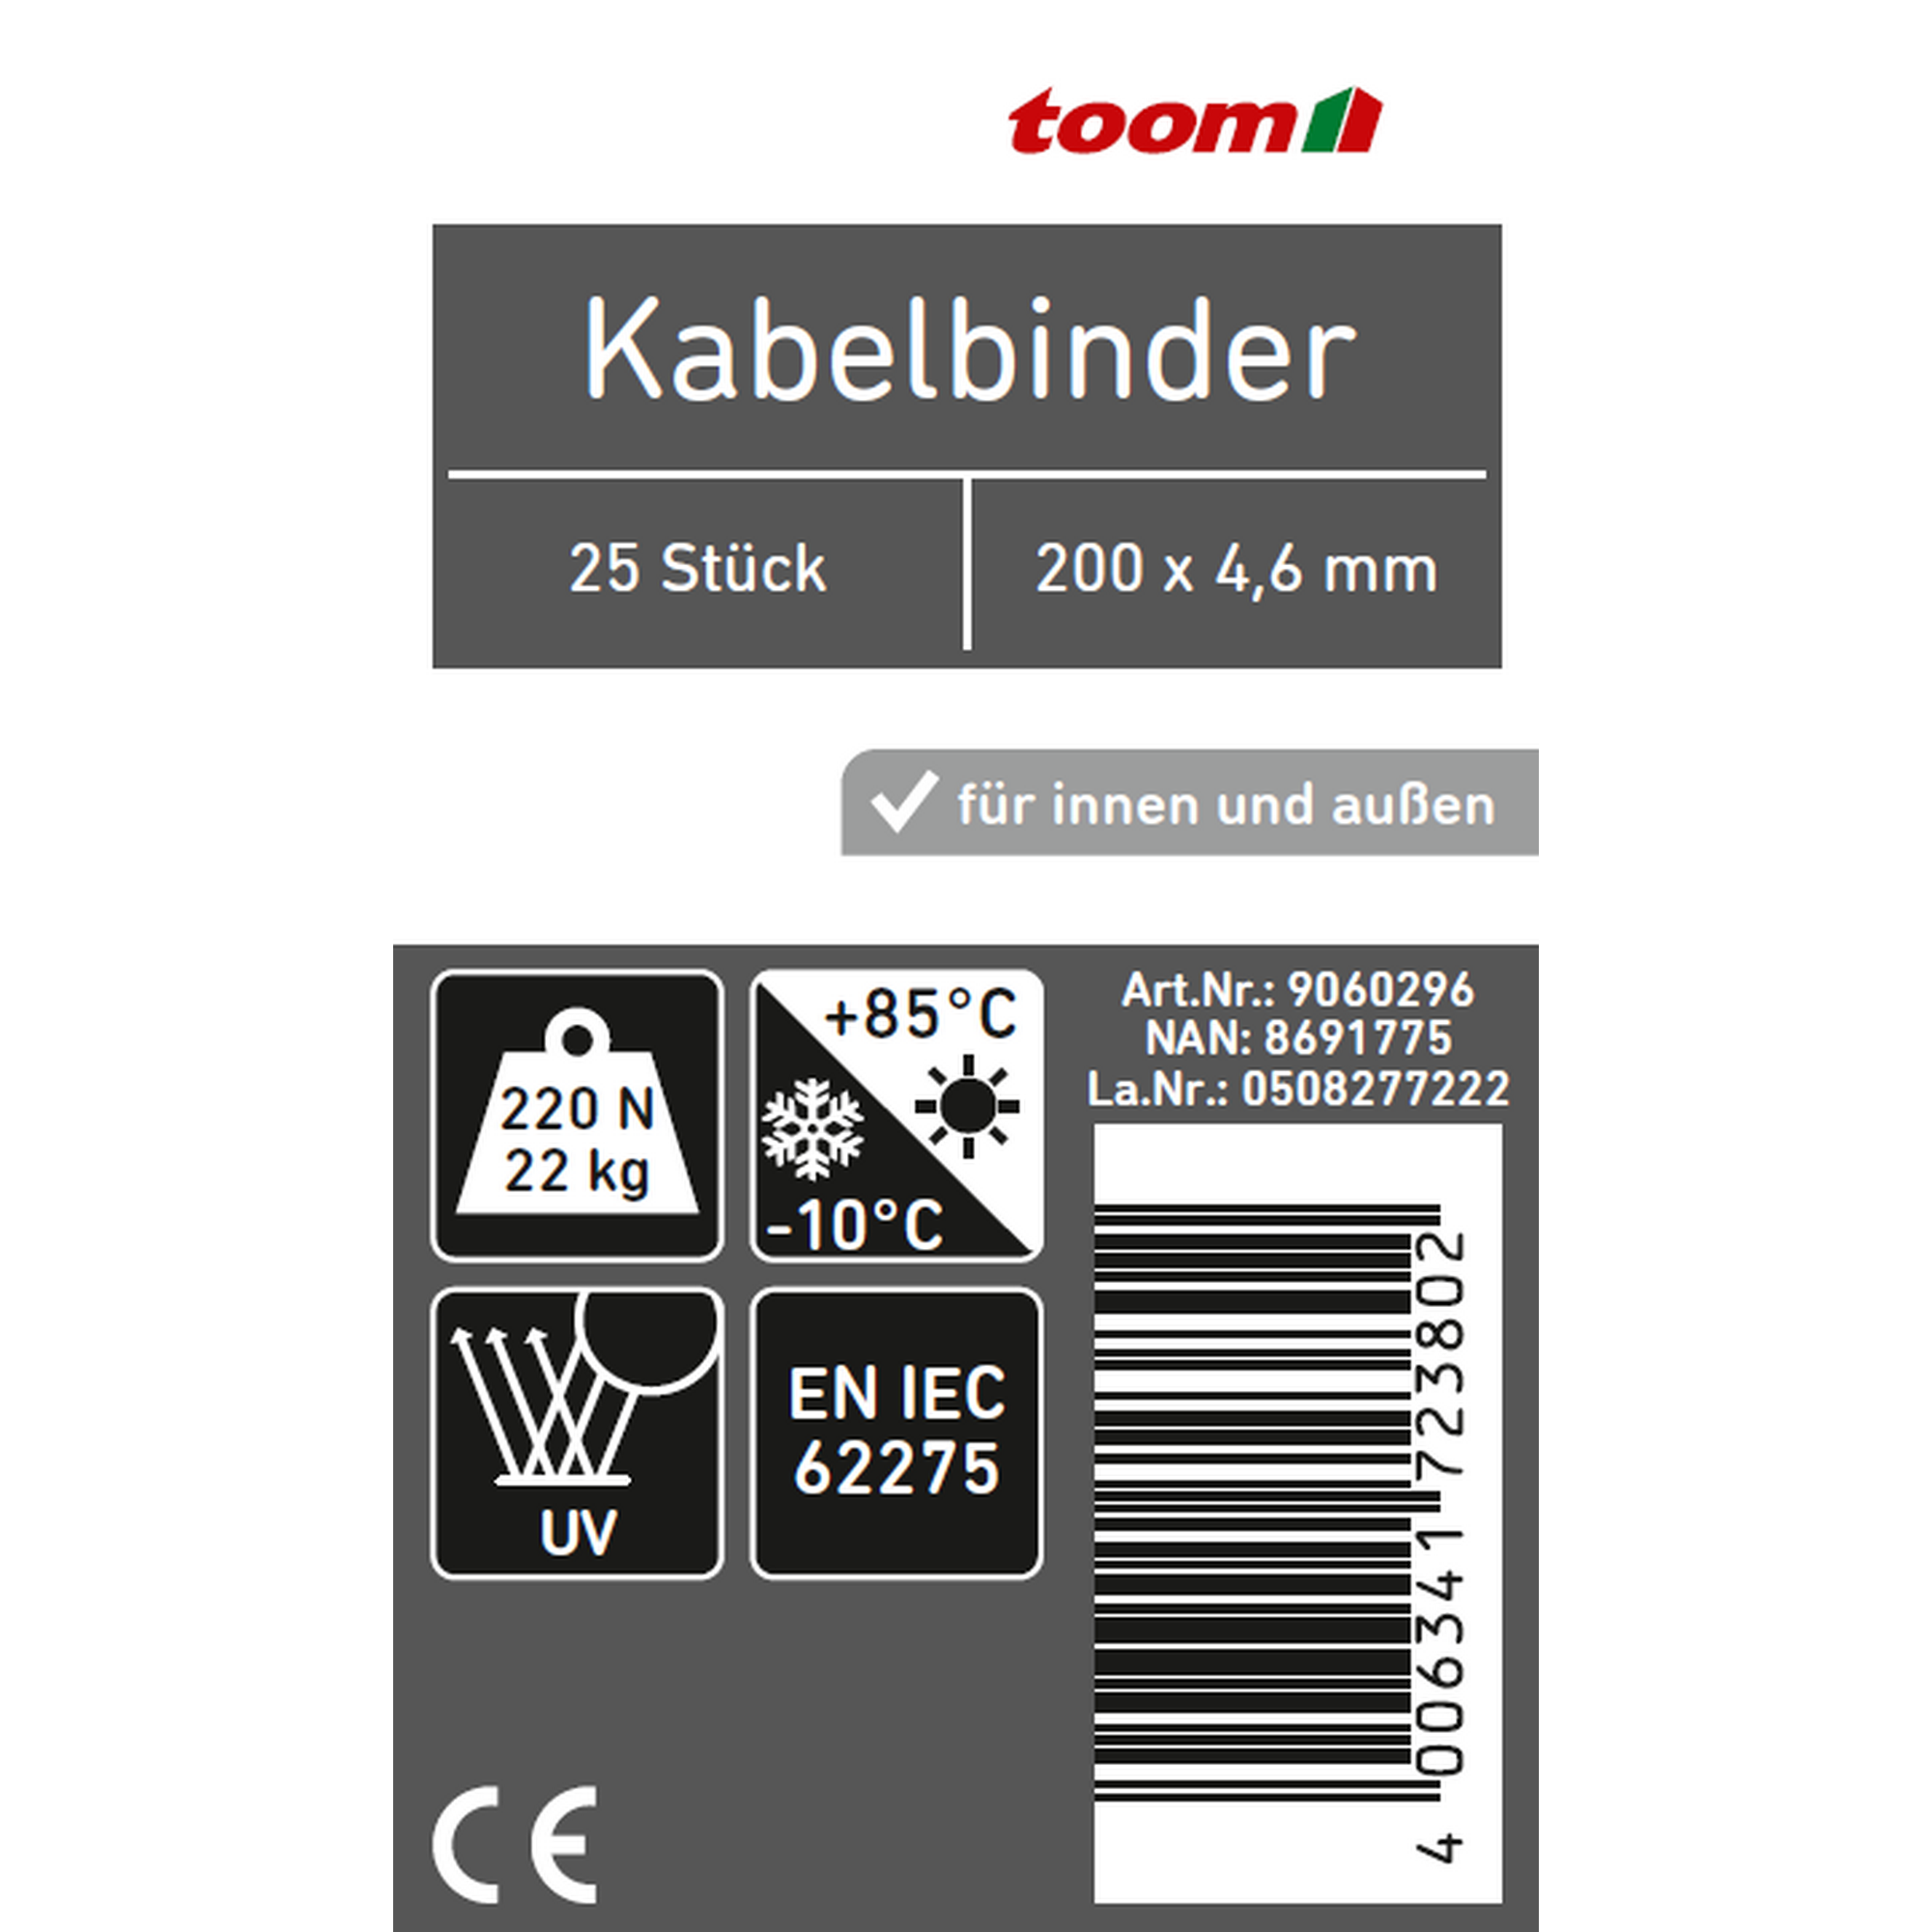 Kabelbinder schwarz 4,6 x 200 mm 25 Stück + product picture